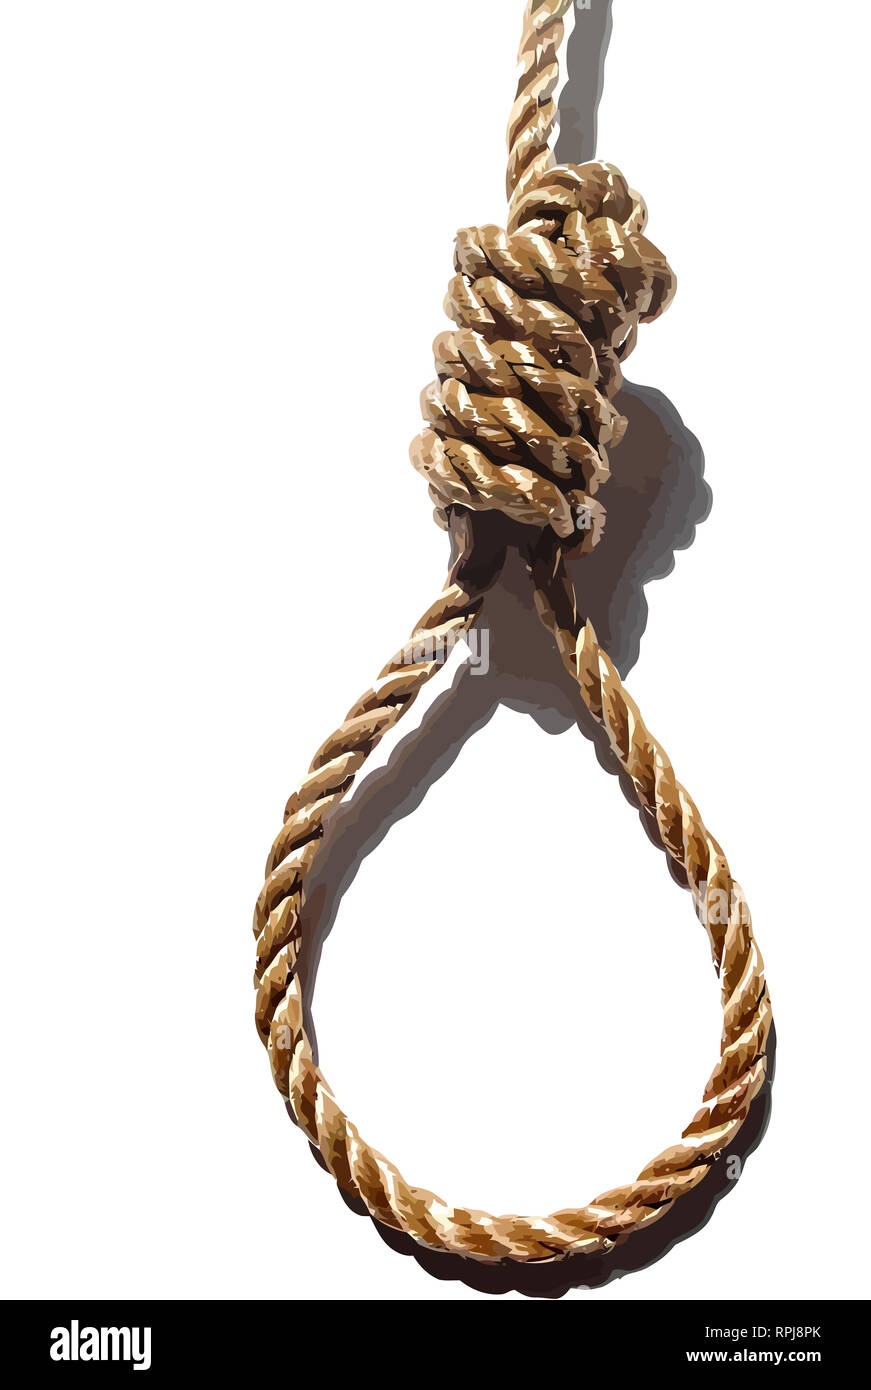 Corde noeud pendaison suicide justice exécution illustration Photo Stock -  Alamy